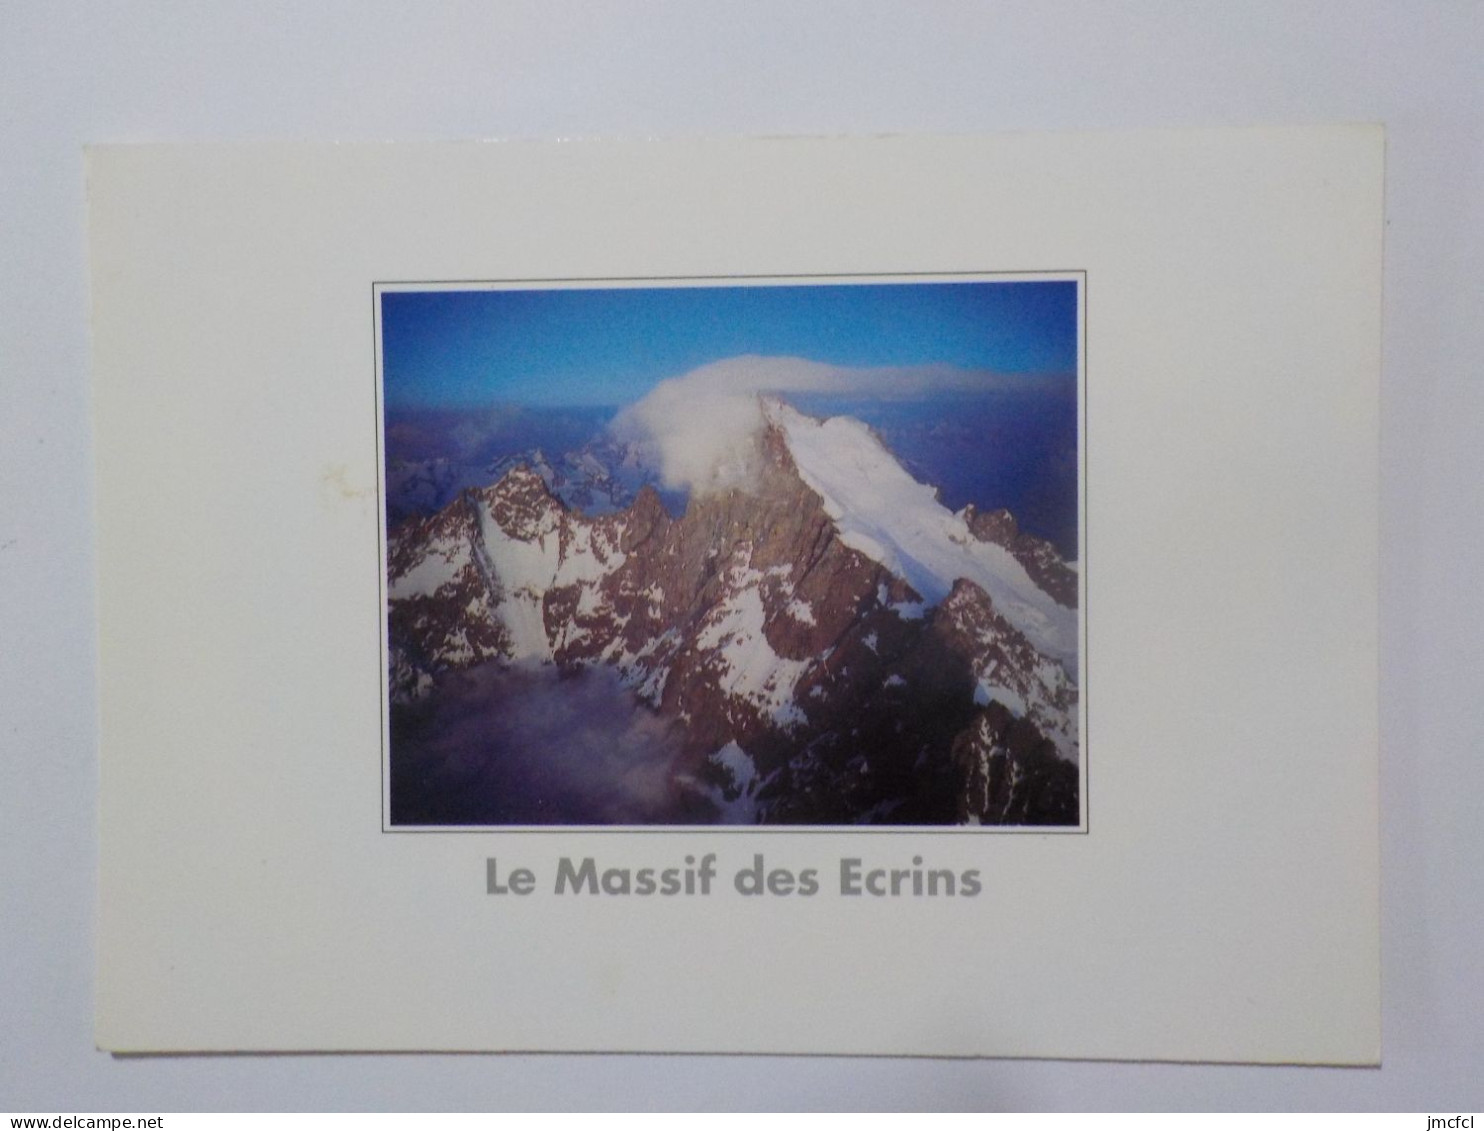 LES ALPES (Savoie-Haute Savoie-Hautes Alpes-Alpes de Haute Provence) Lots de 67 Cartes a 0.20 euros l'une